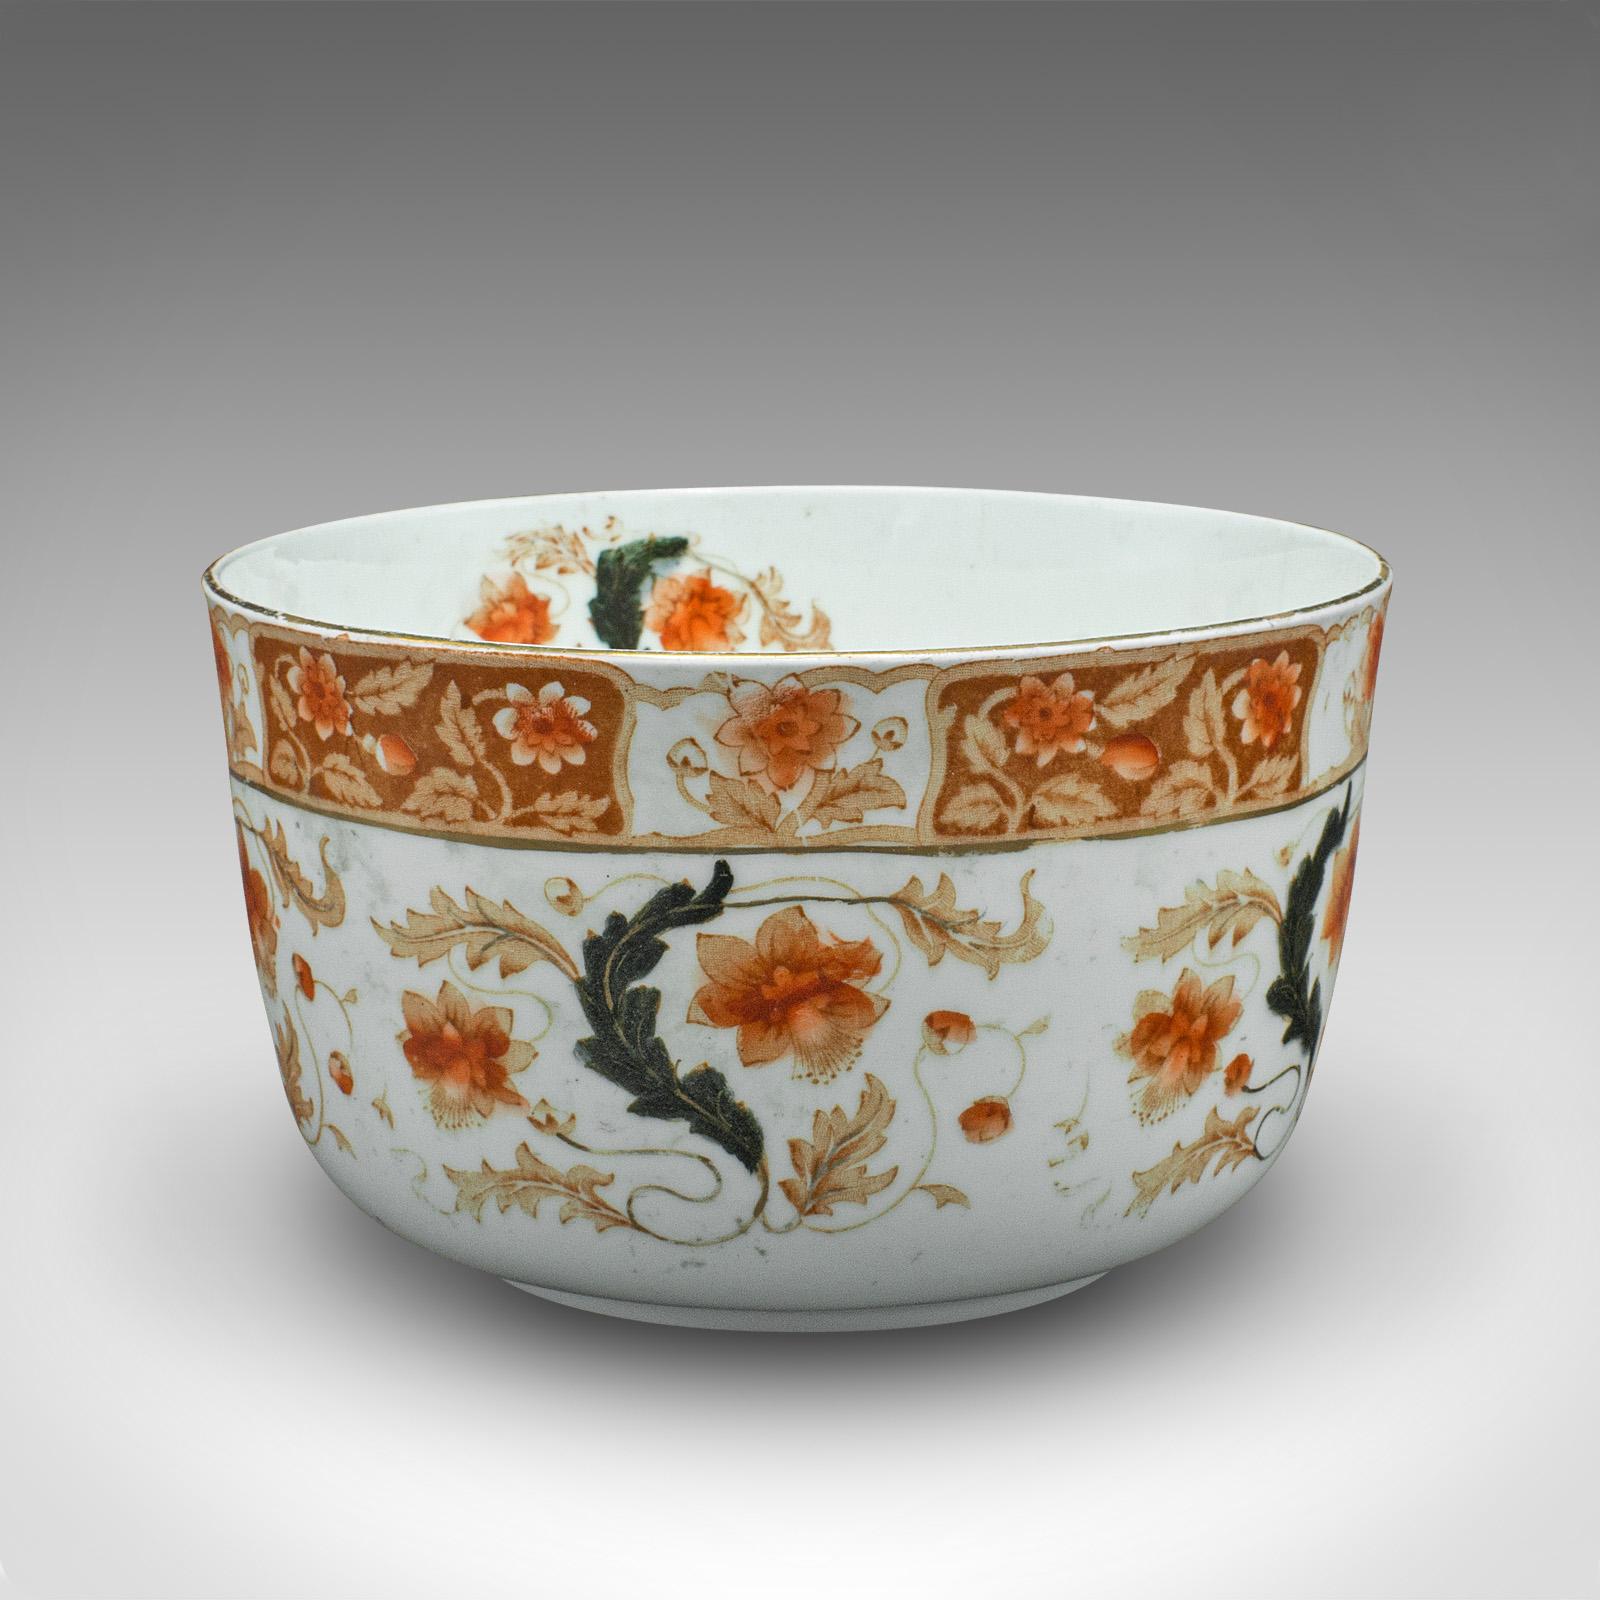 European Antique Decorative Bowl, Continental, Ceramic, Serving Dish, Victorian, C.1900 For Sale